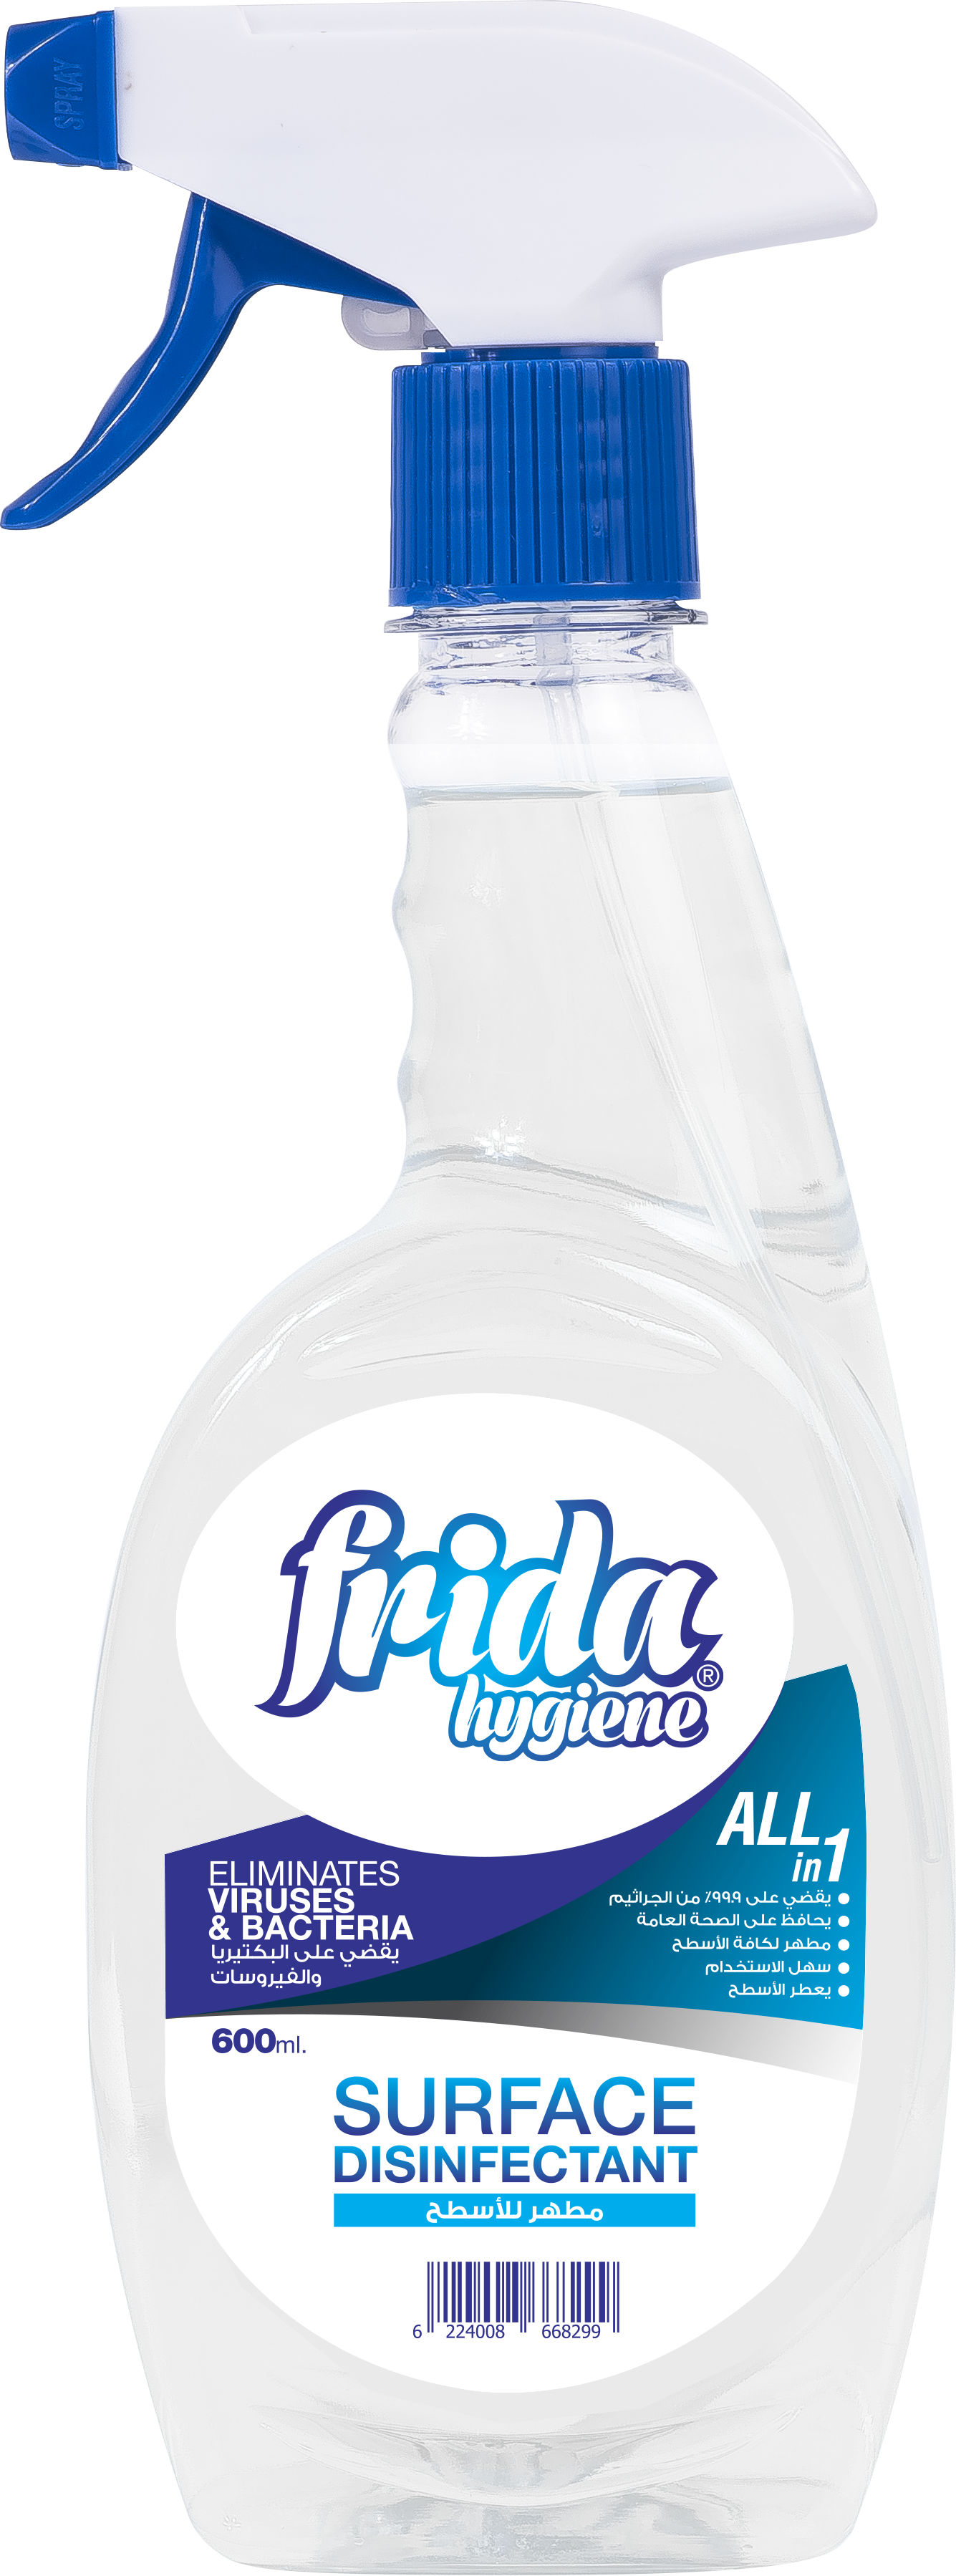 Frida hygiene - surface disinfectant 600 ml